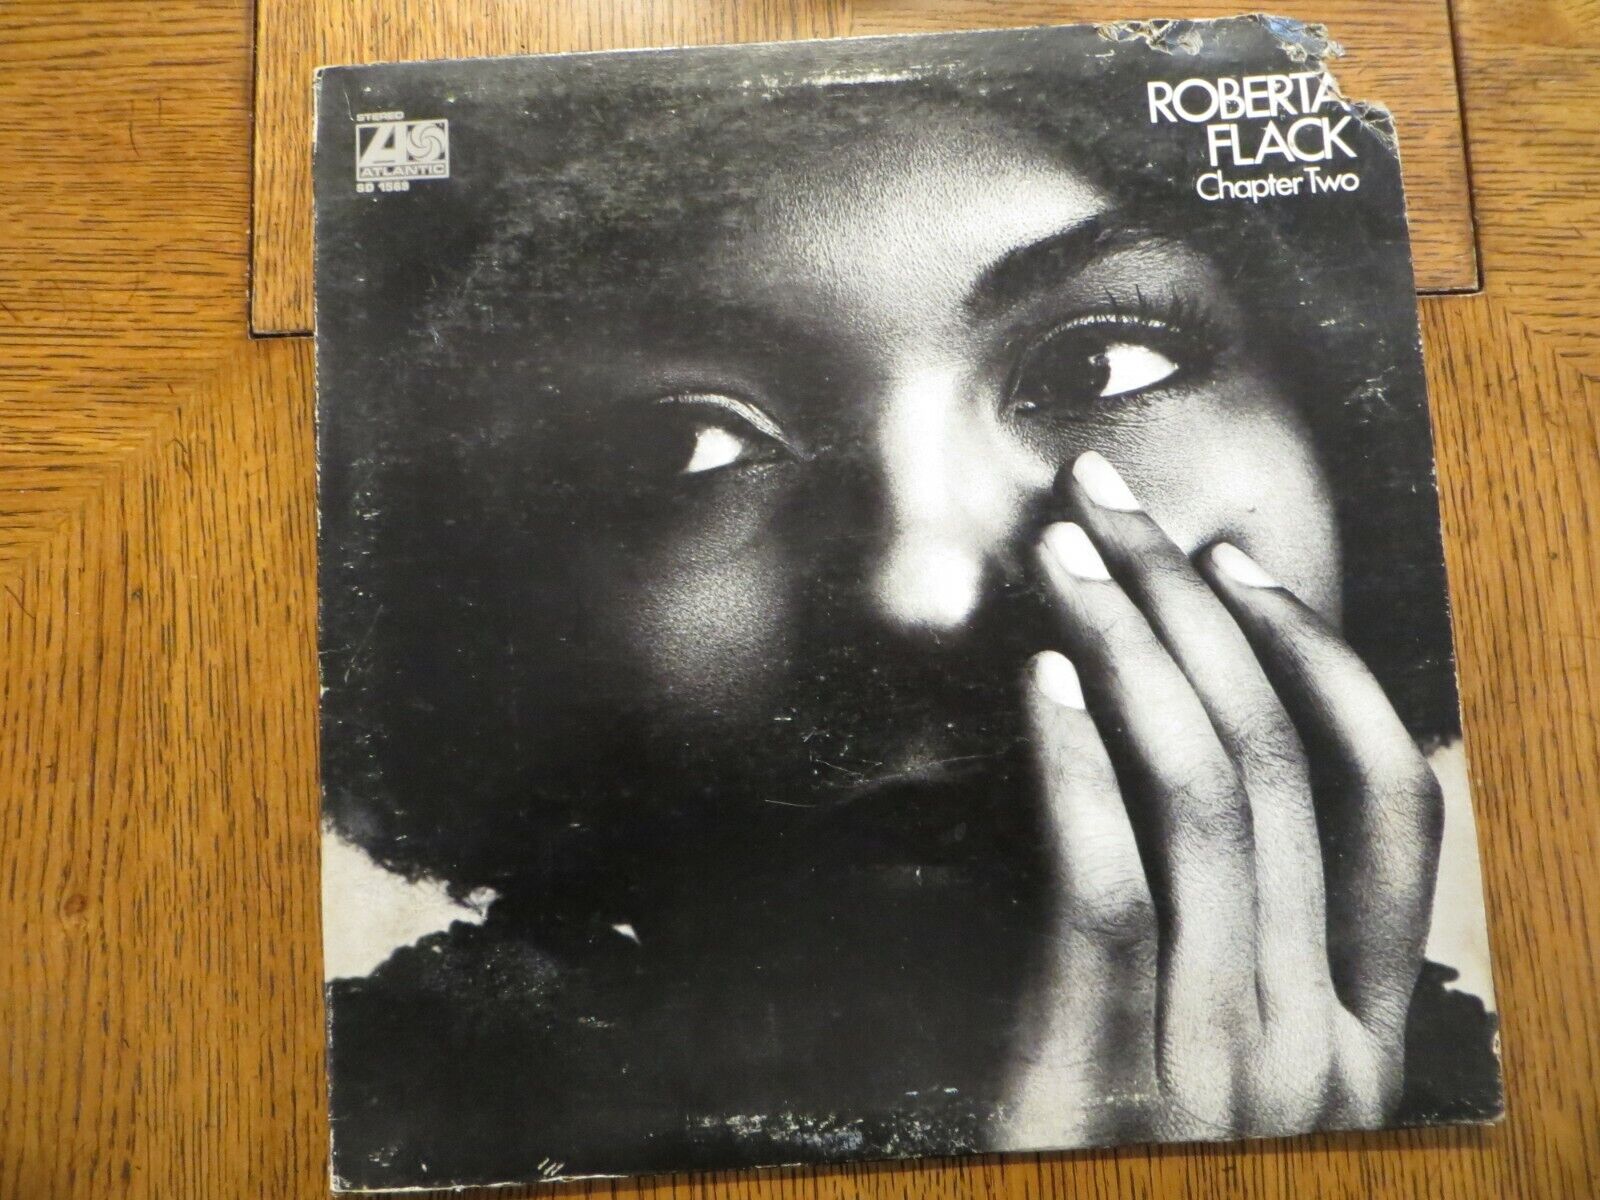 Roberta Flack - Chapter Two - 1970 - Atlantic SD 1569 Vinyl Record VG+/G+